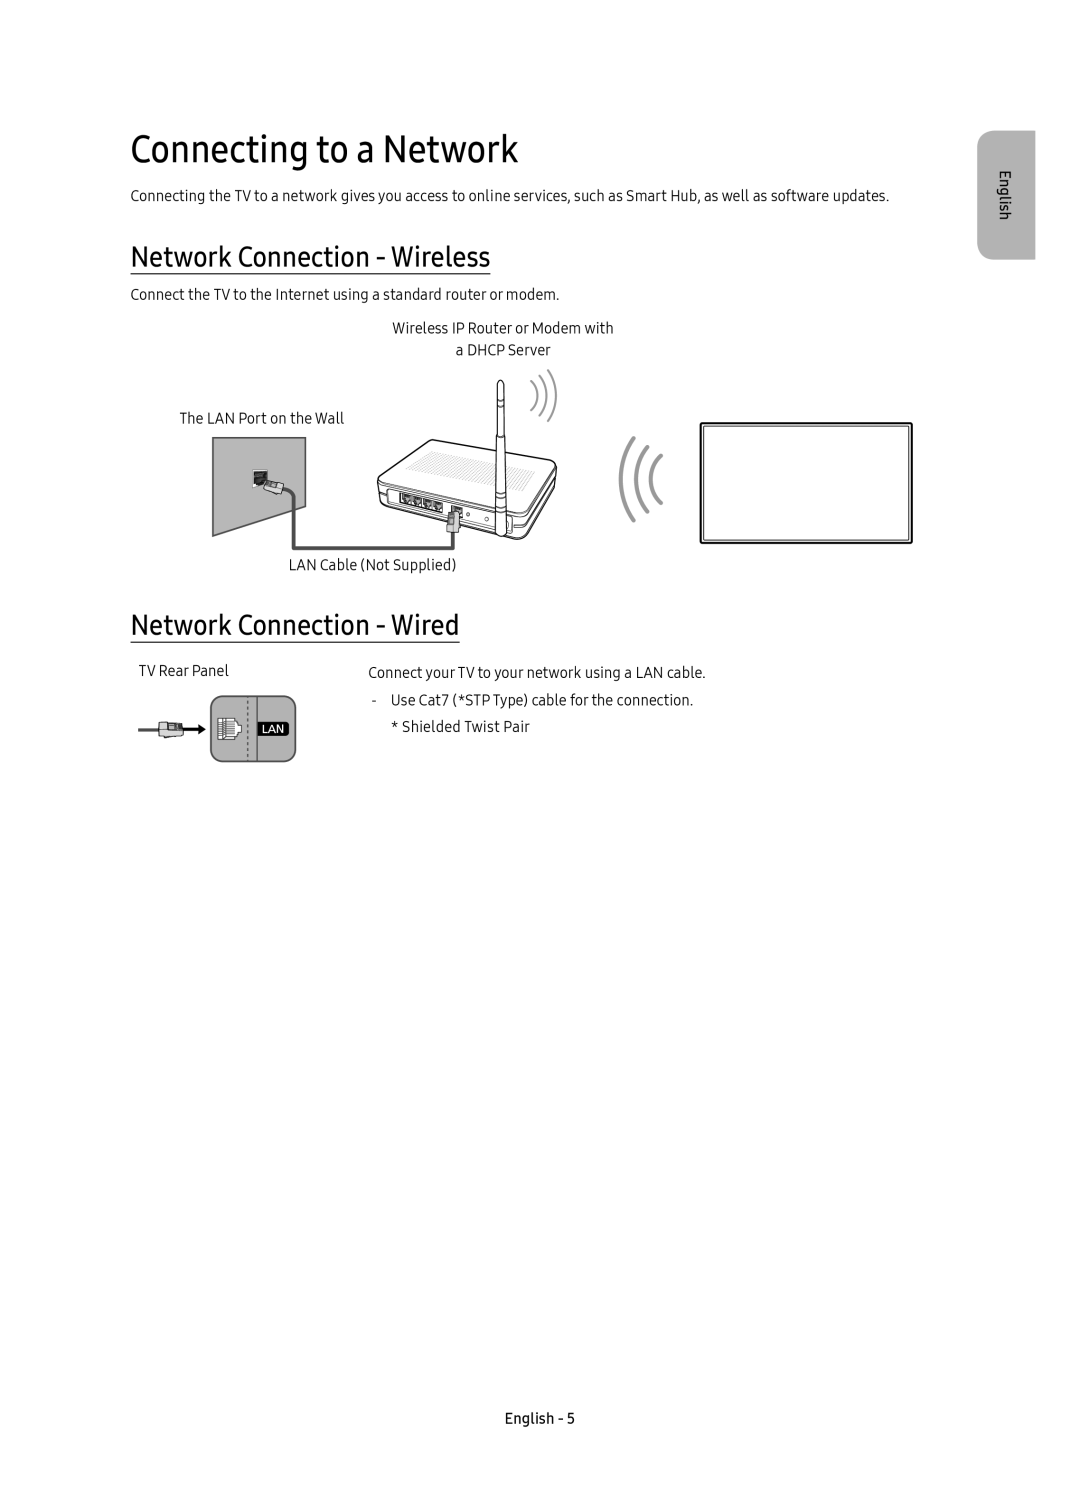 Samsung UE55KU6510UXZT manual Connecting to a Network, Network Connection - Wireless, Network Connection - Wired, English 